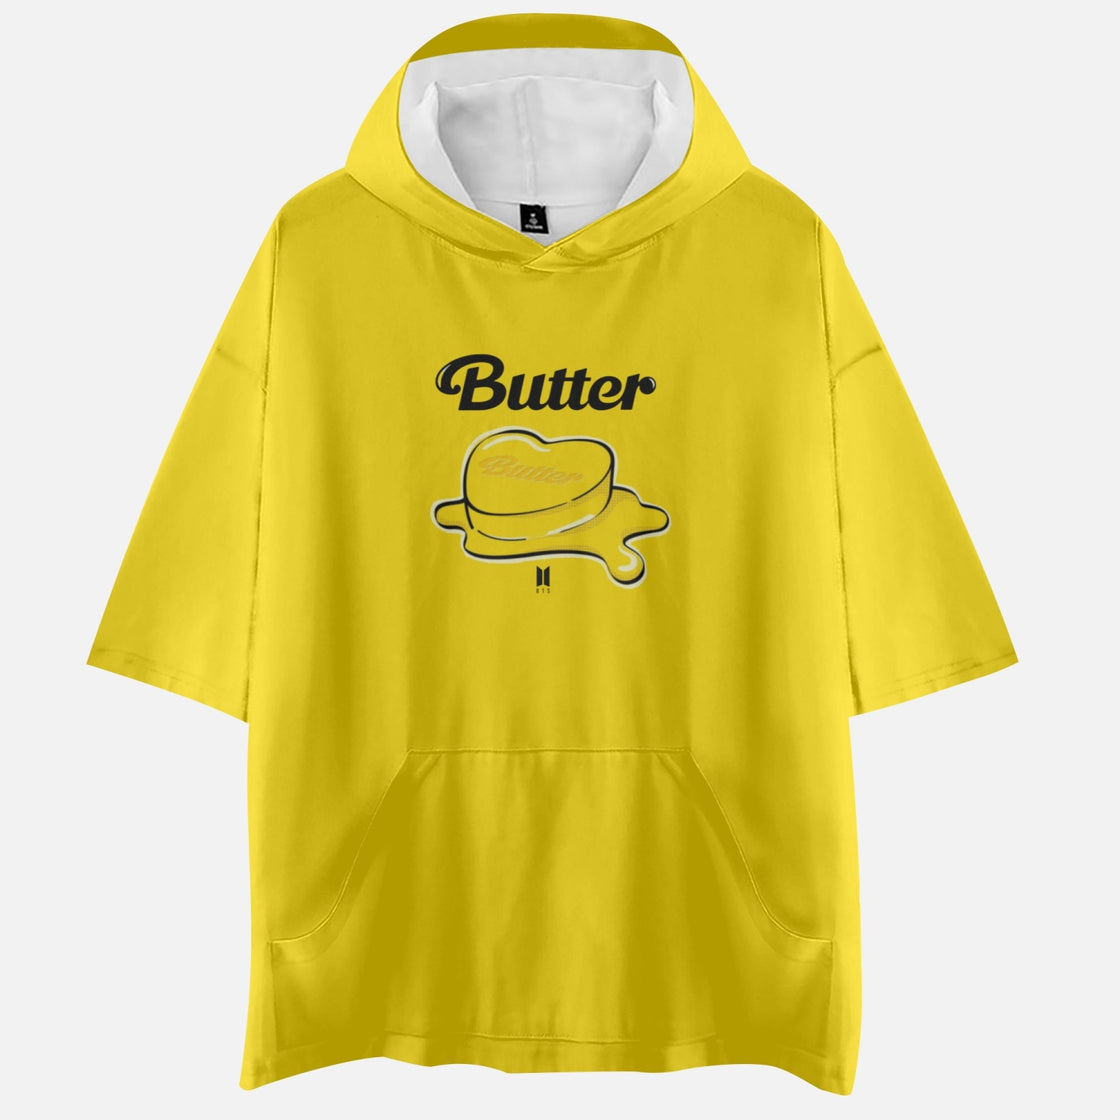 New Single -Butter Hoodies